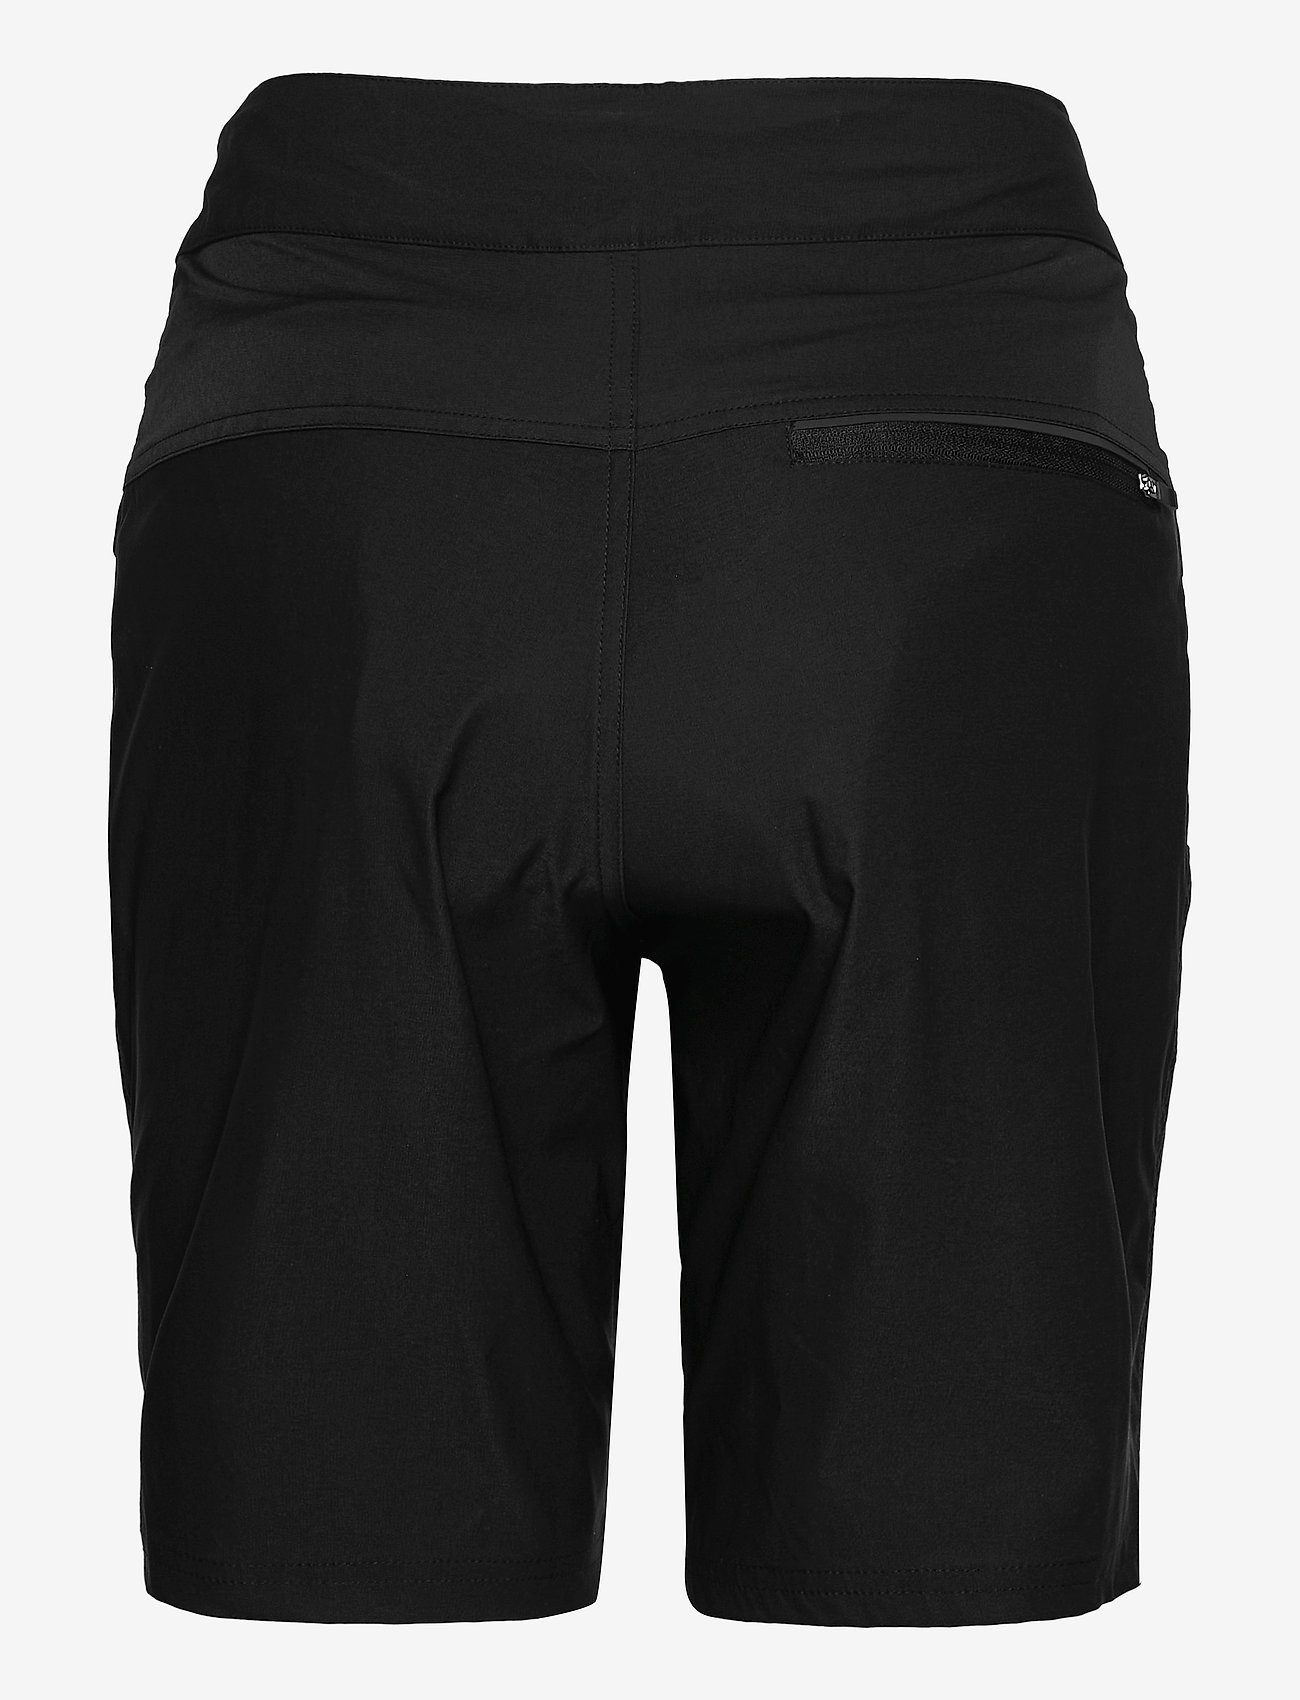 Craft - Core Offroad Xt Shorts W Pad W - træningsshorts - black - 1